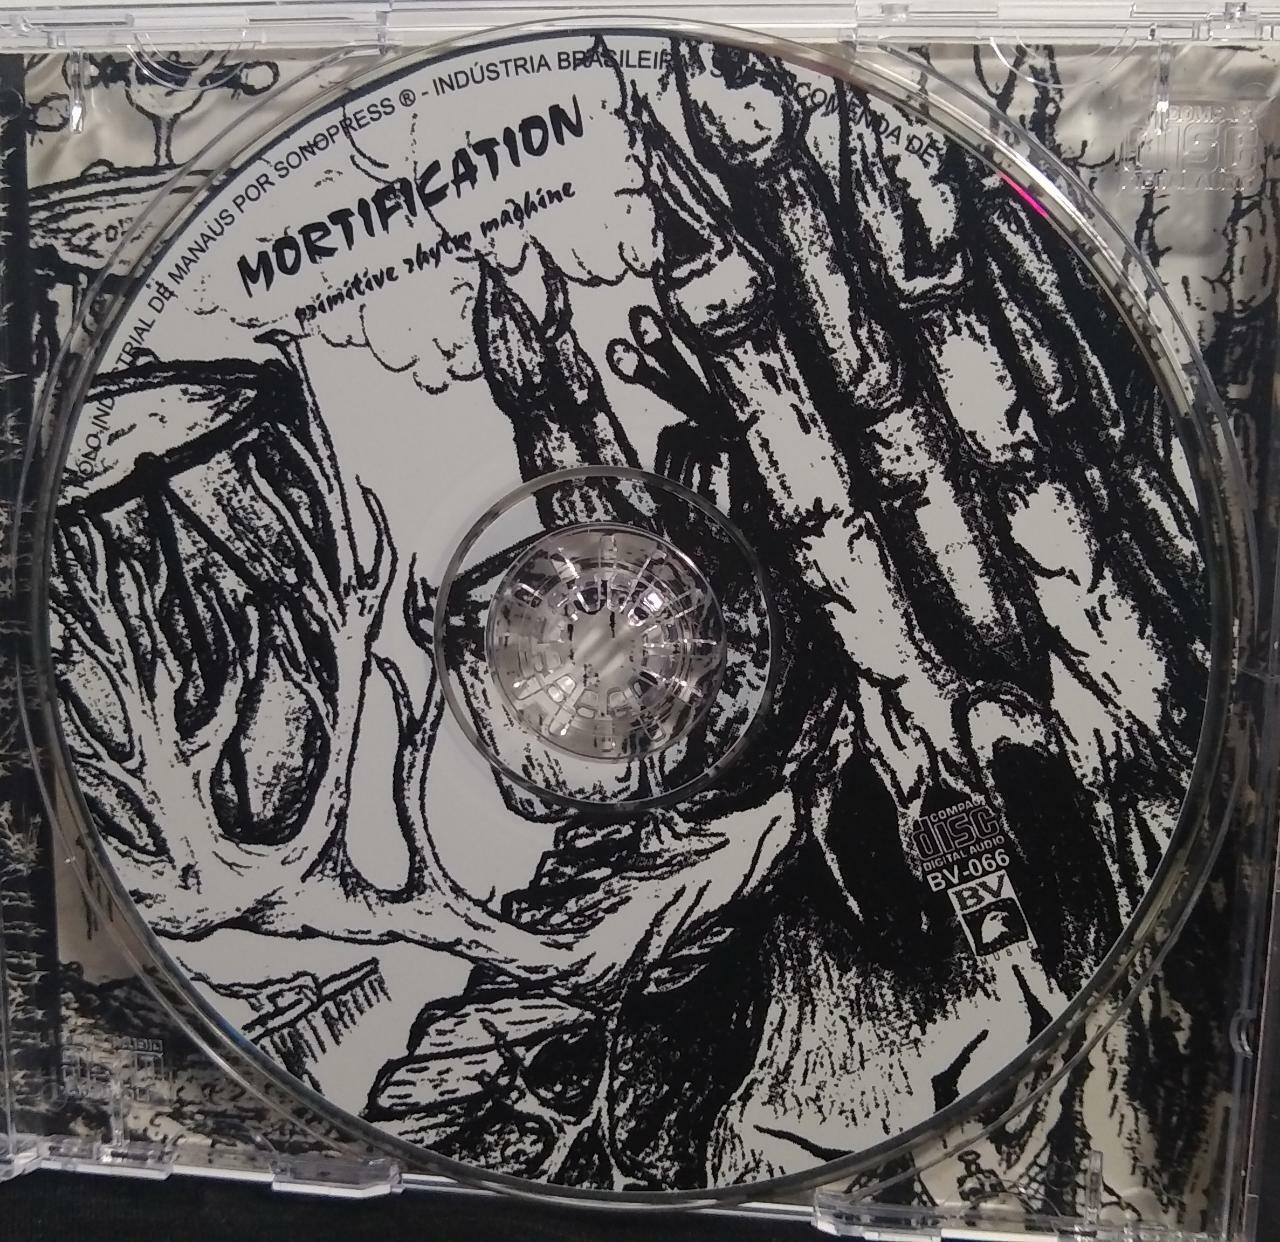 CD - Mortification - Primitive Rhythm Machine